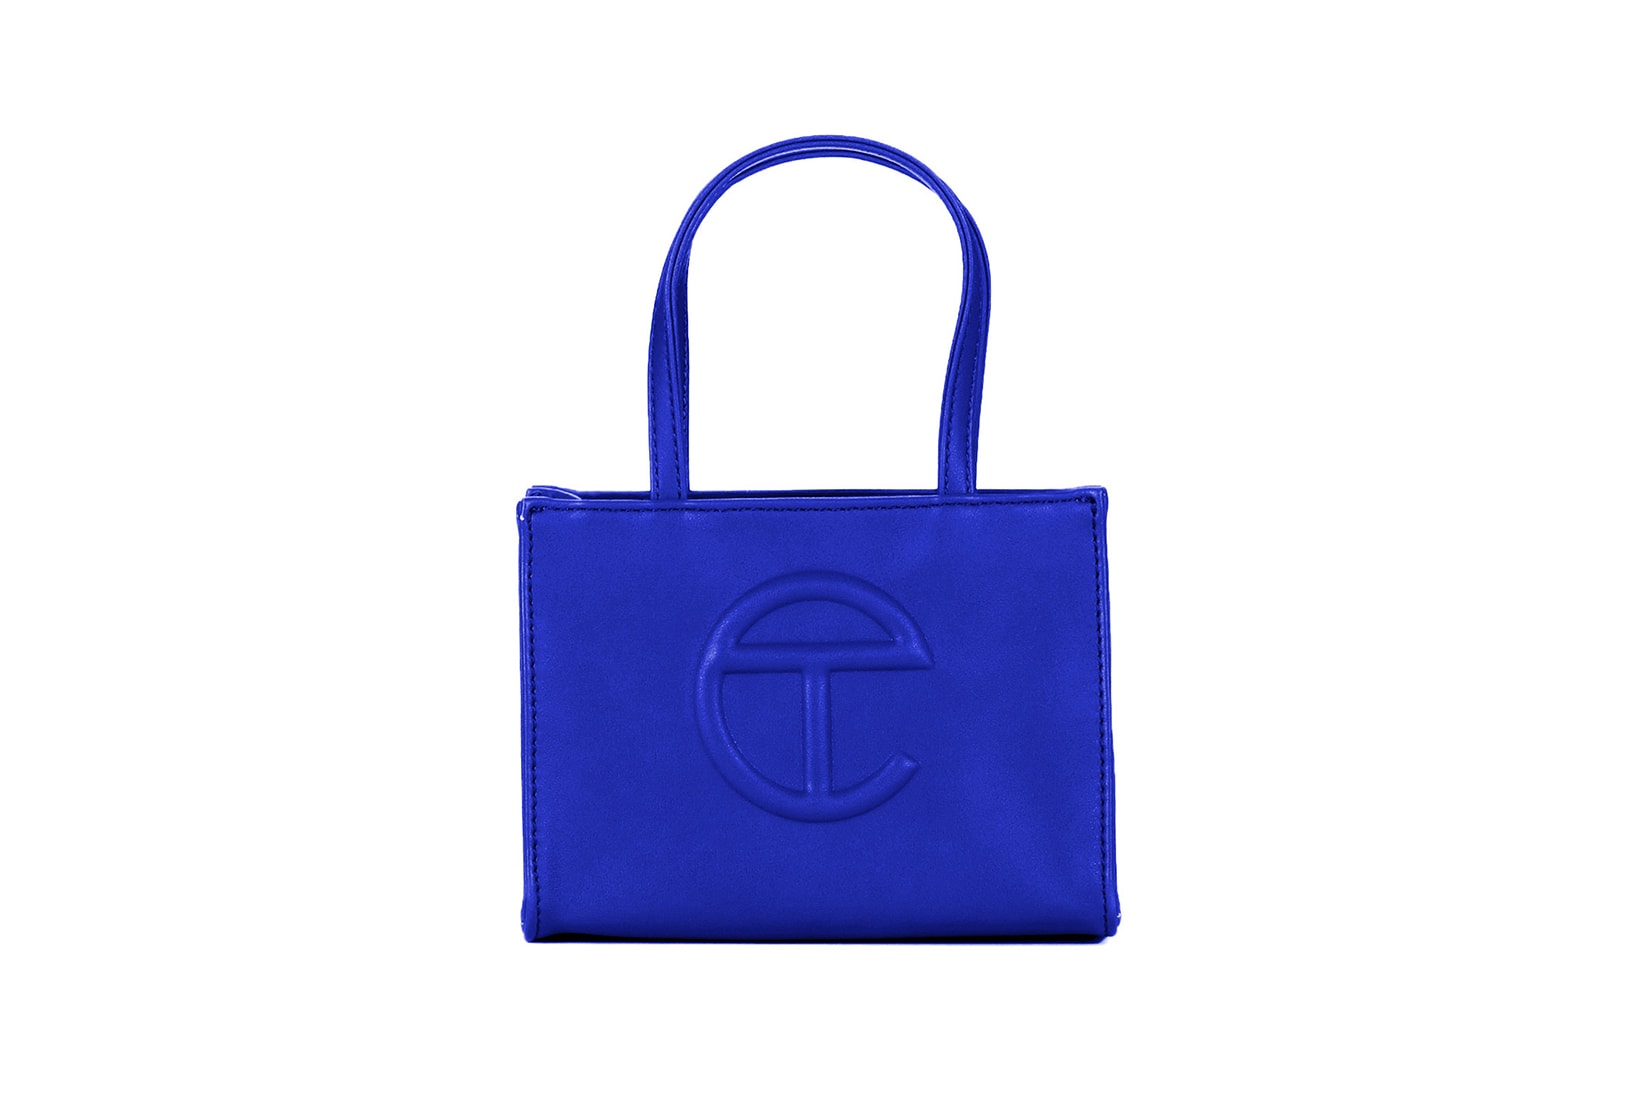 Telfar Shopping Bag Painter's Tape Royal Blue New Colorway Small